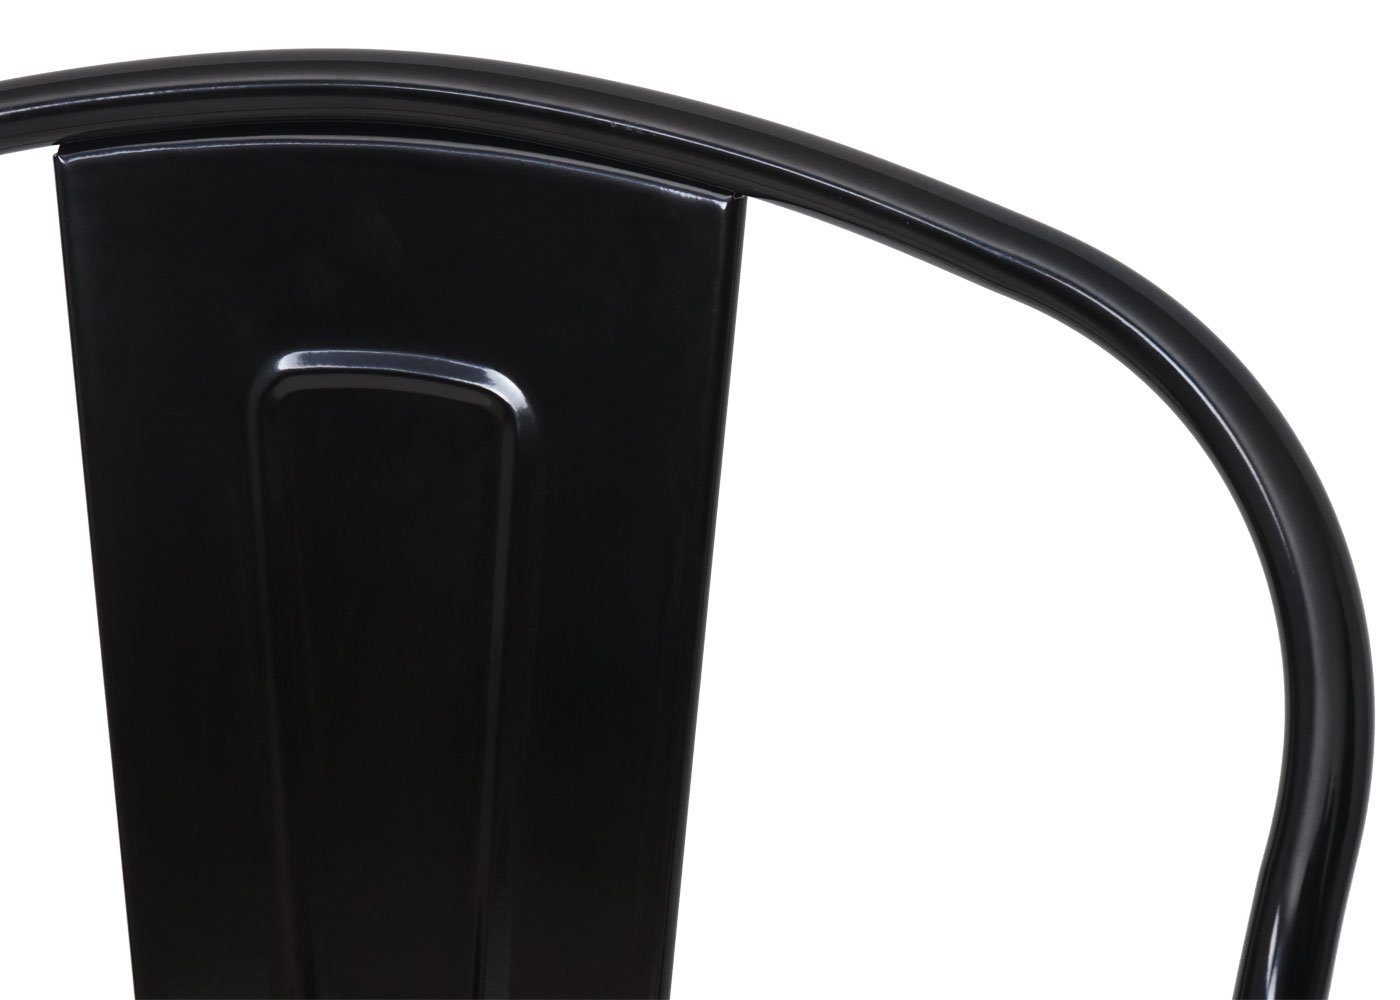 schwarz Querstreben mehr bodenschonende Gummifüße, MCW-A73-1, MCW Stapelstuhl für Stapelbar, Stabilität